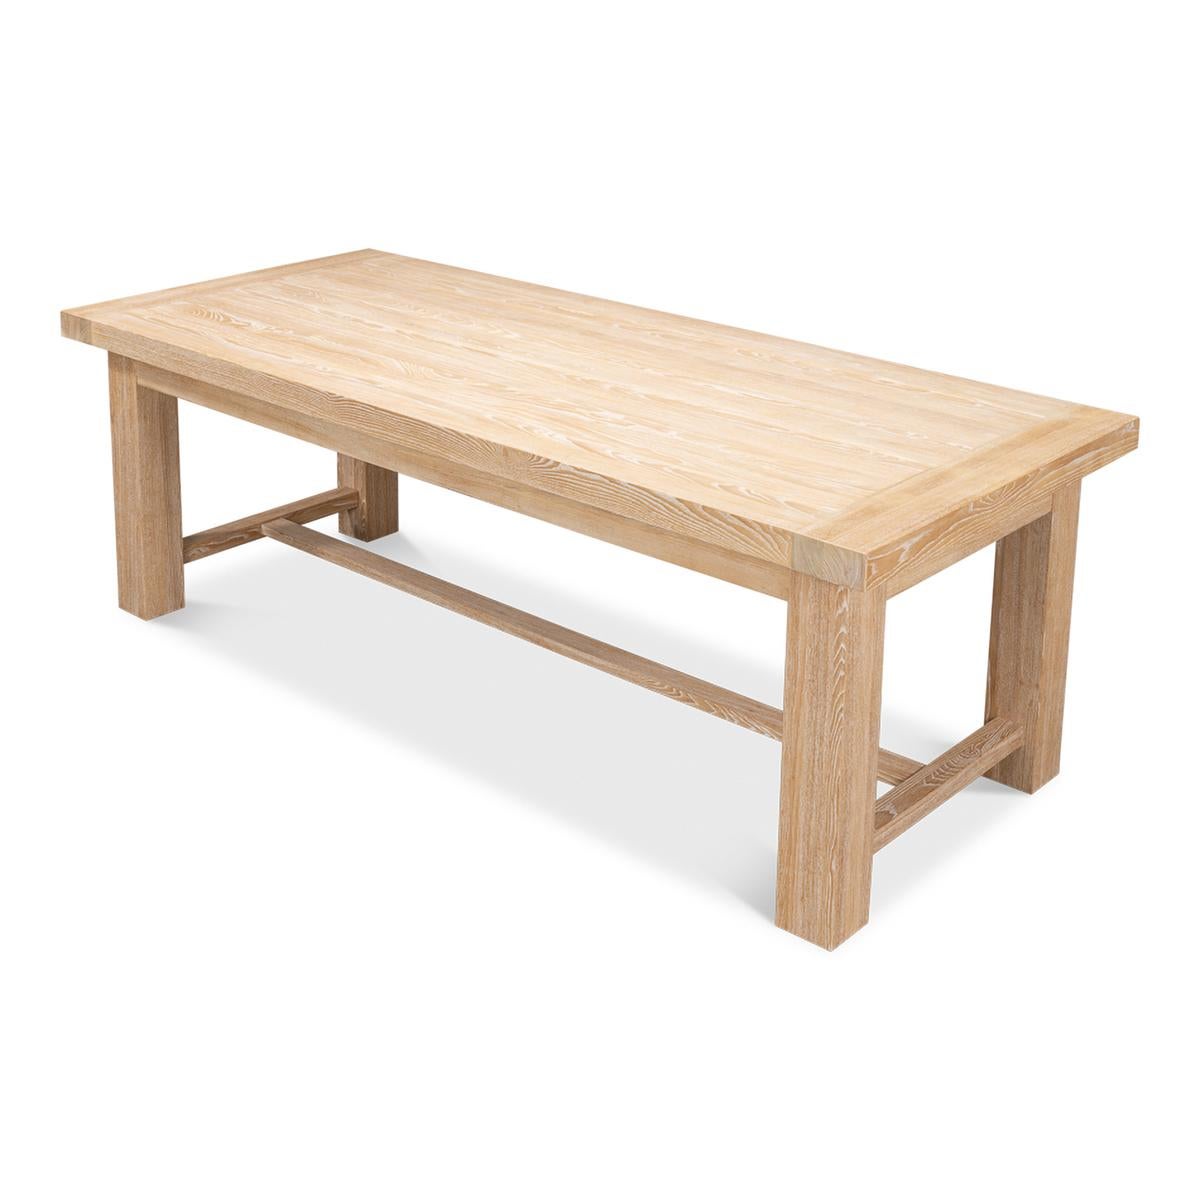 oak dining table industrial